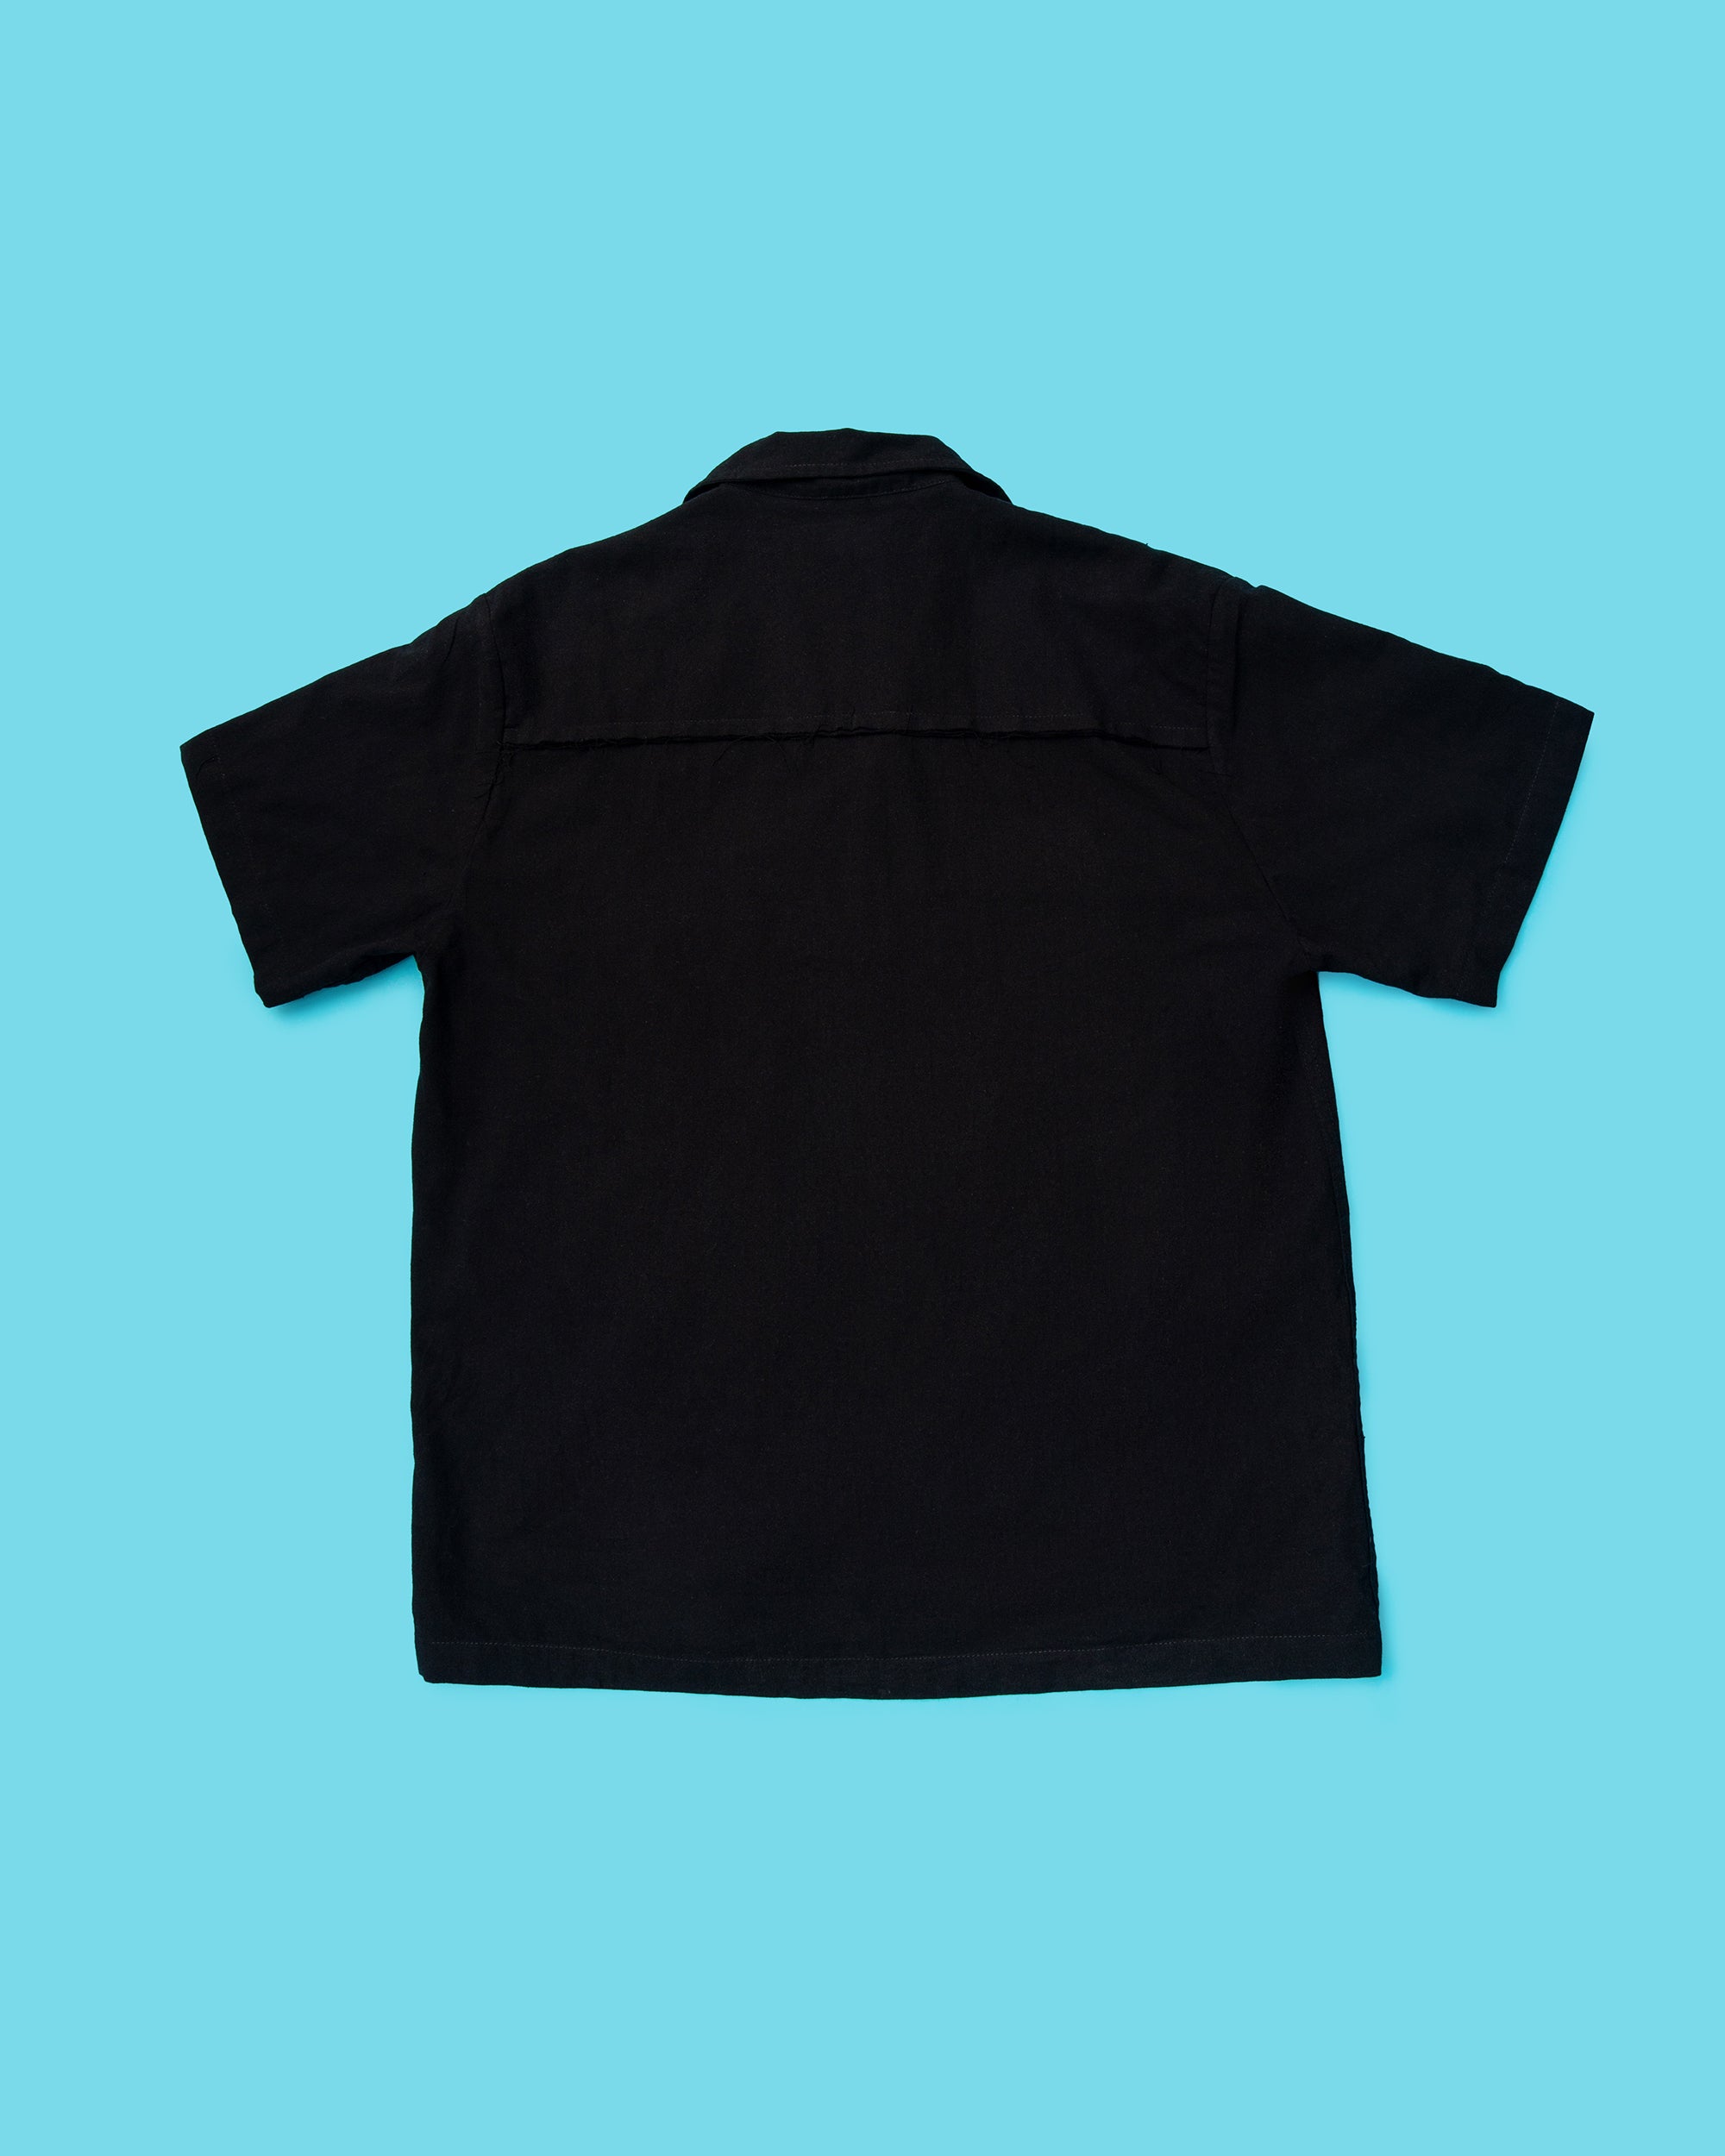 The Uniform Shirt in Black